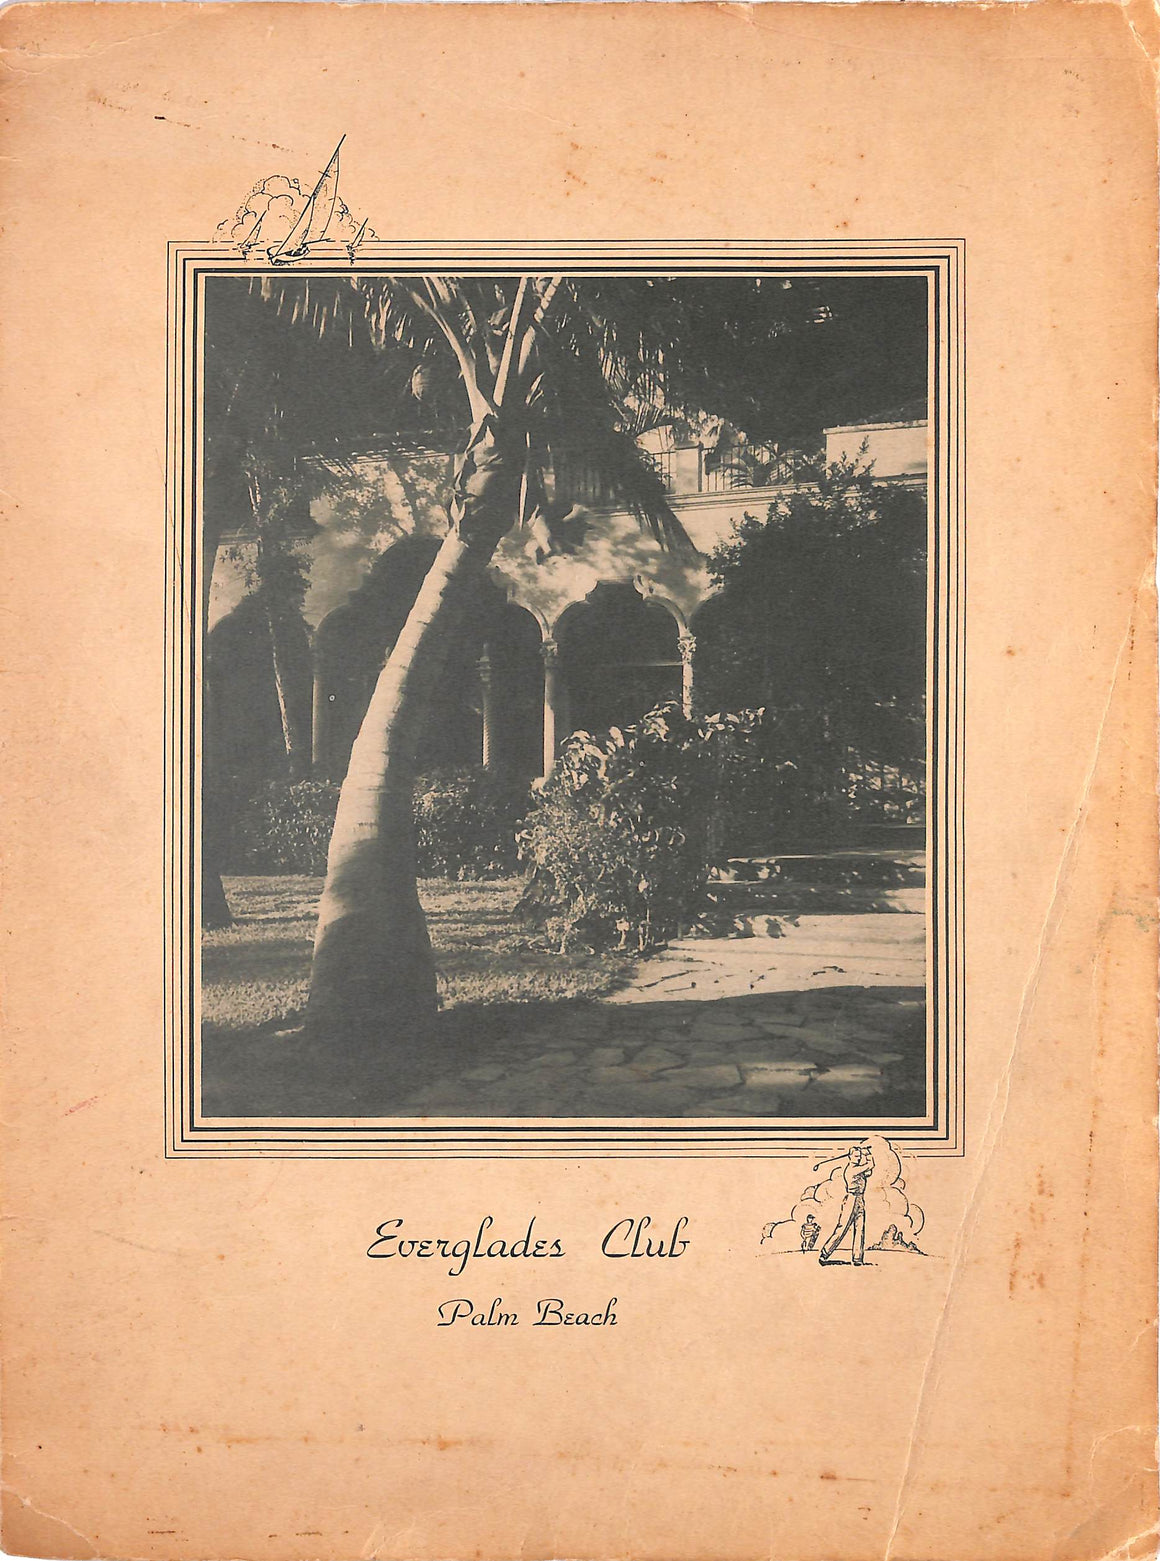 "The Everglades Club Palm Beach 1946 Dinner Menu"